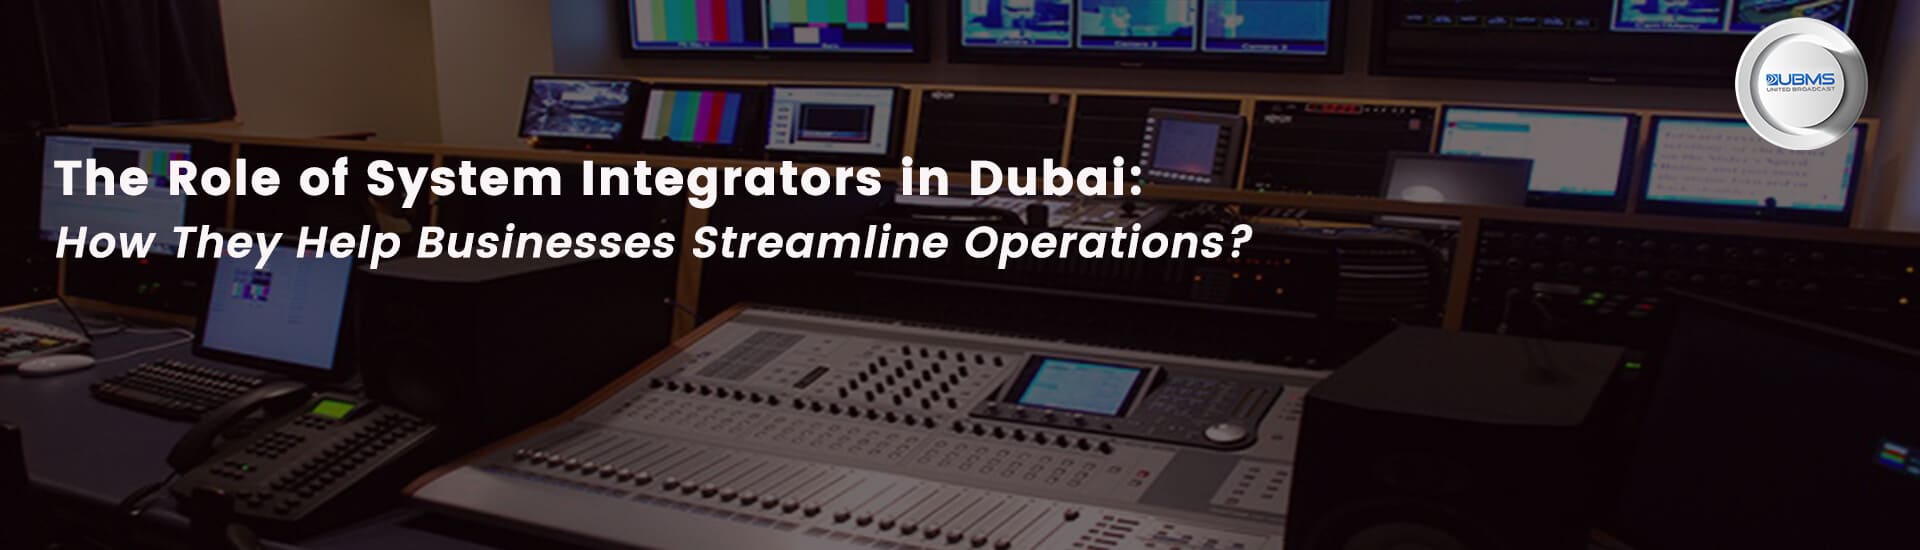 The Role of System Integrators in Dubai